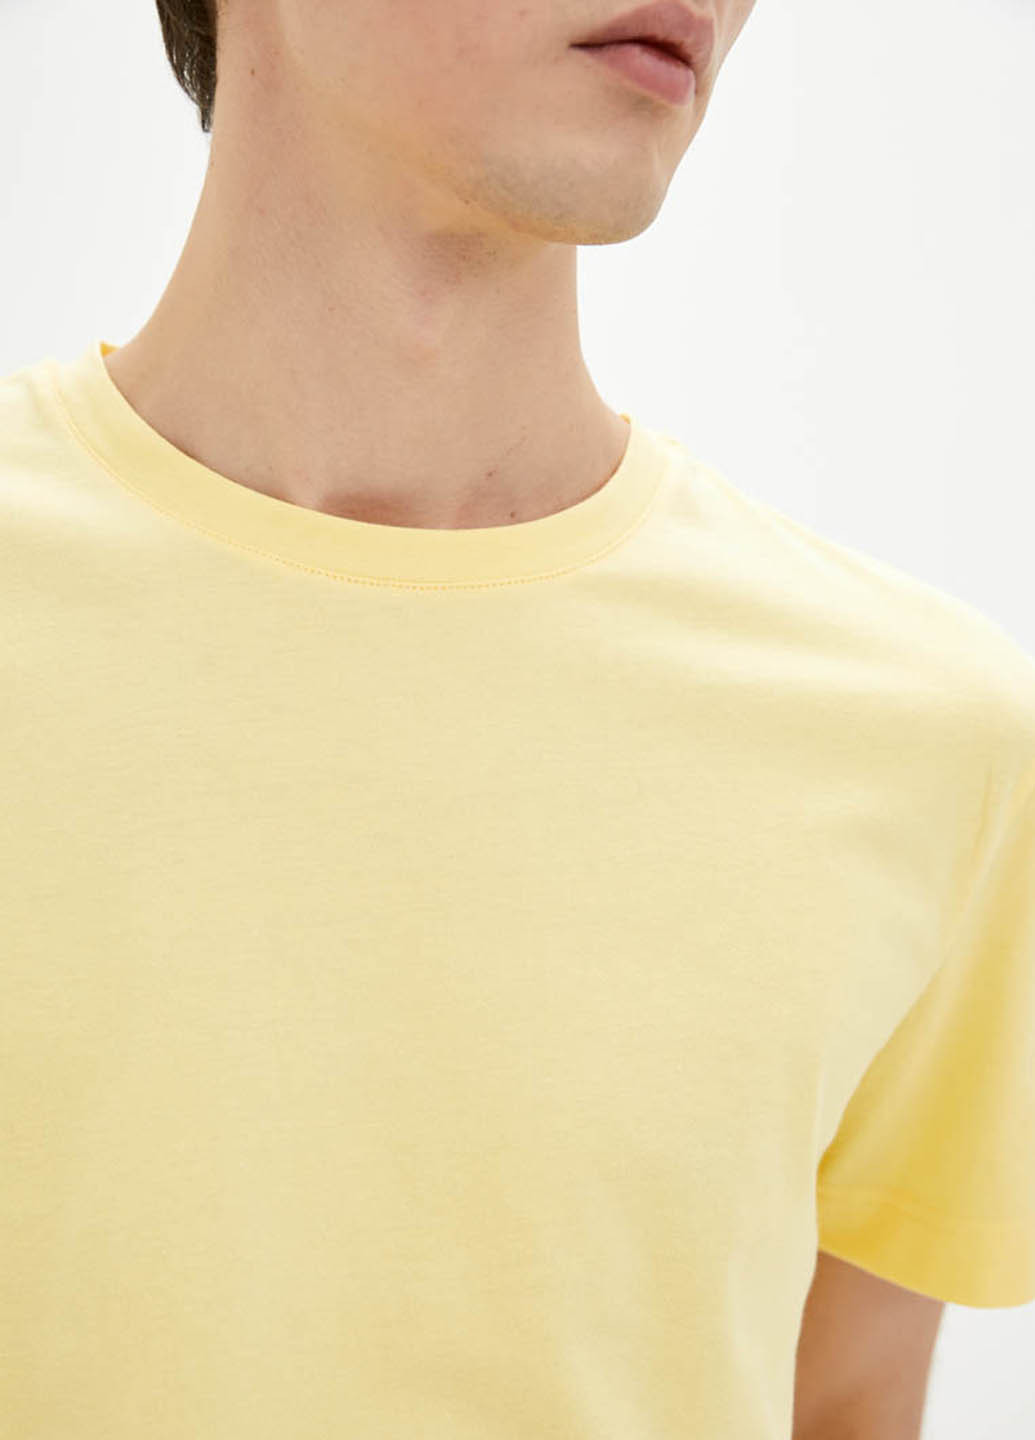 Желтая футболка Promin.